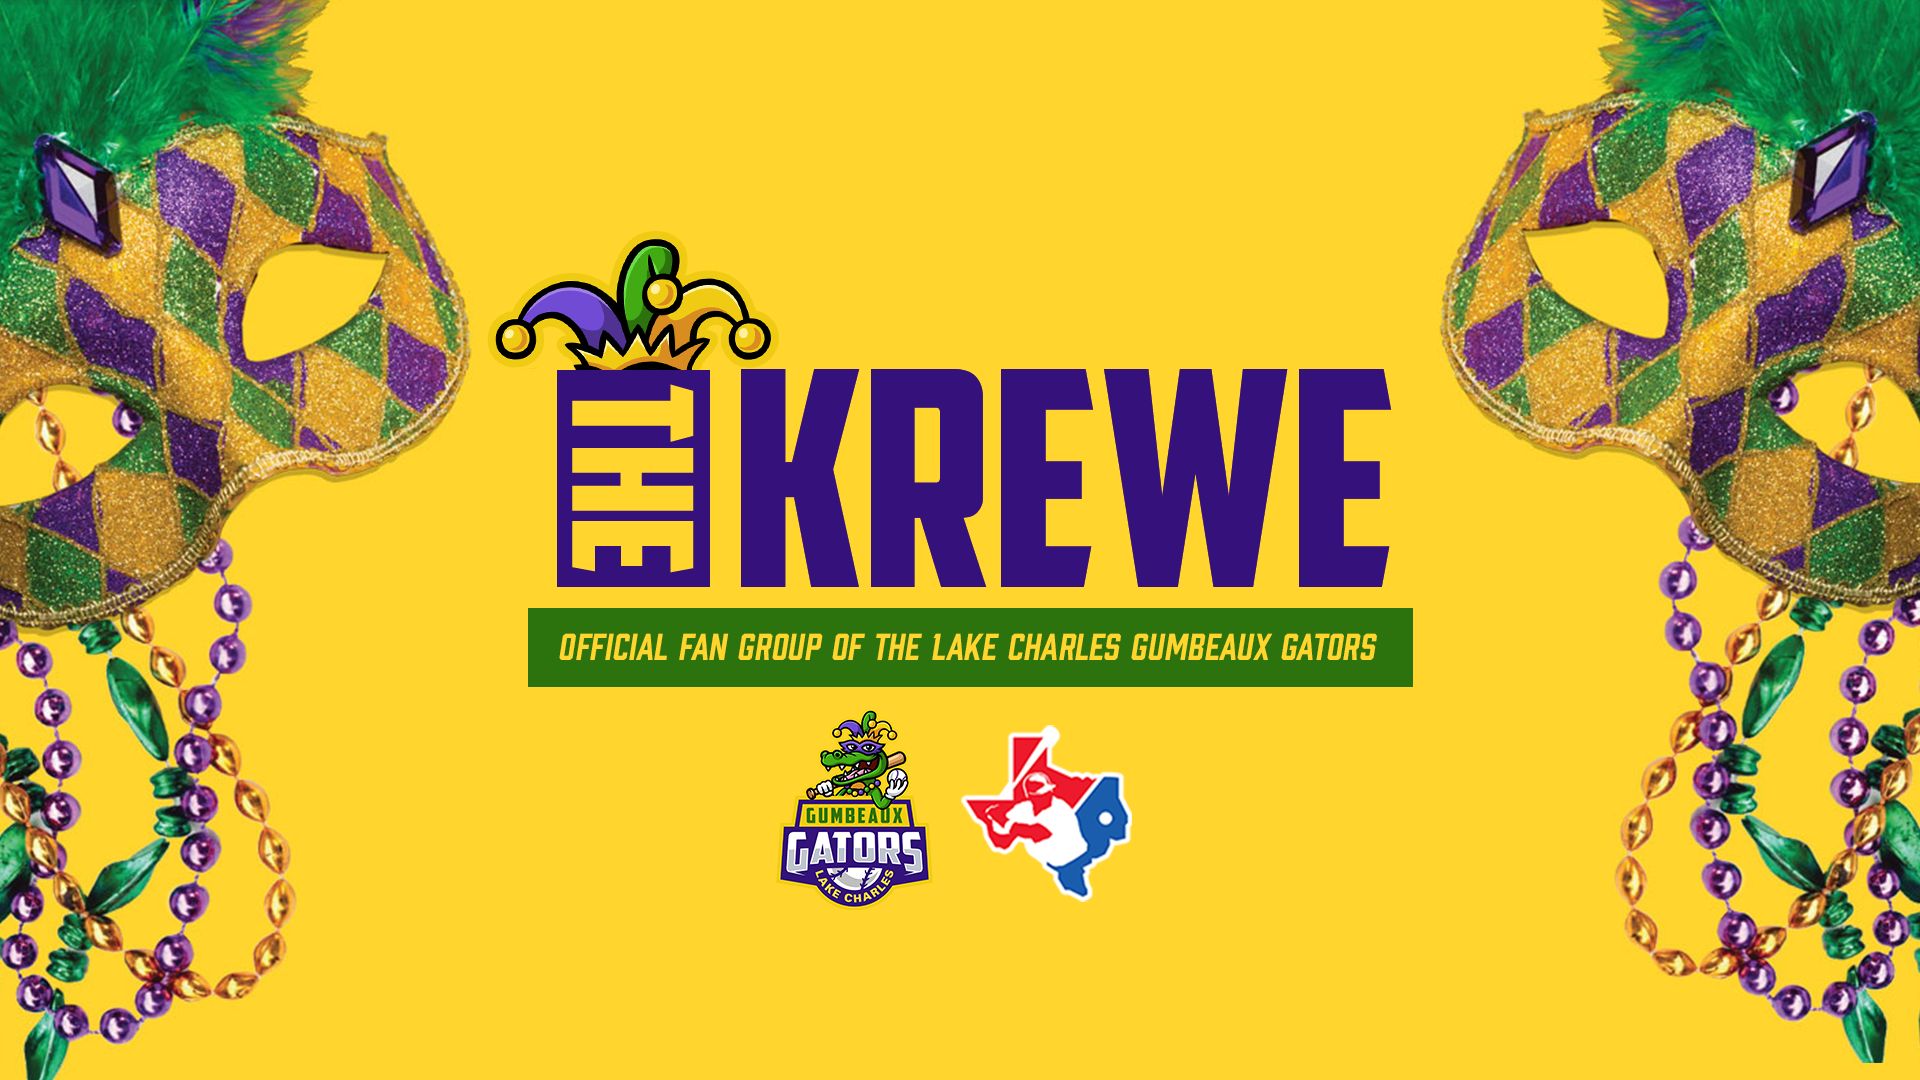 “The Krewe” - Lake Charles Gumbeaux Gators Fan Group